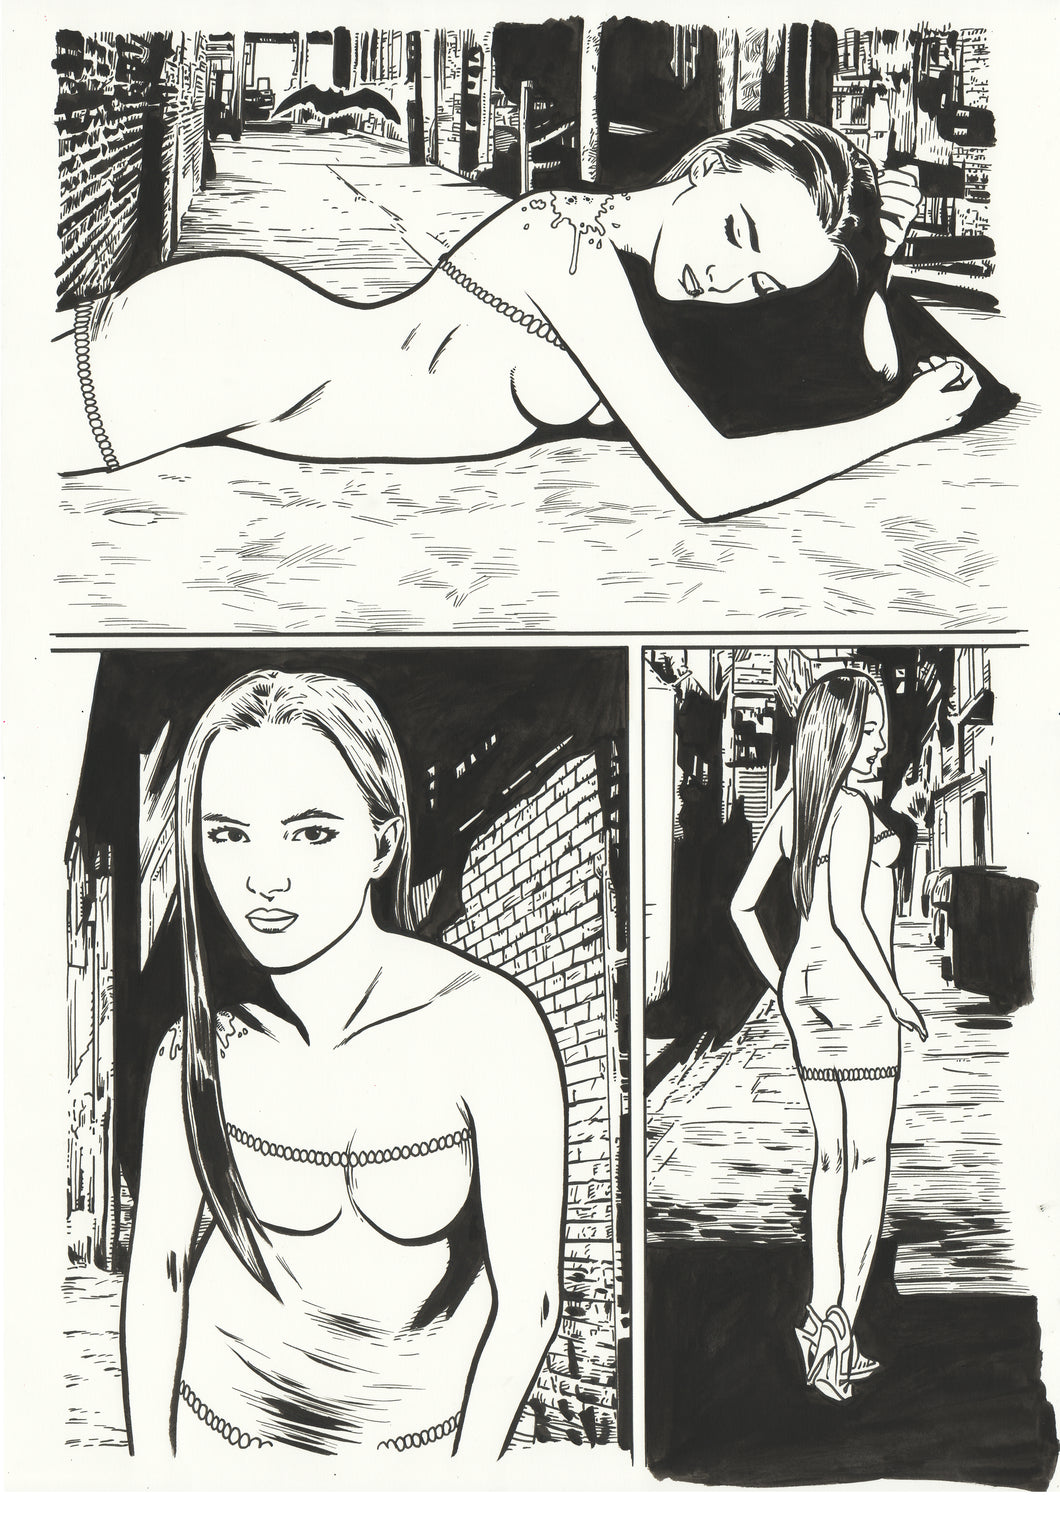 Vampocalypse #2 - Story Page 04 - Original Art